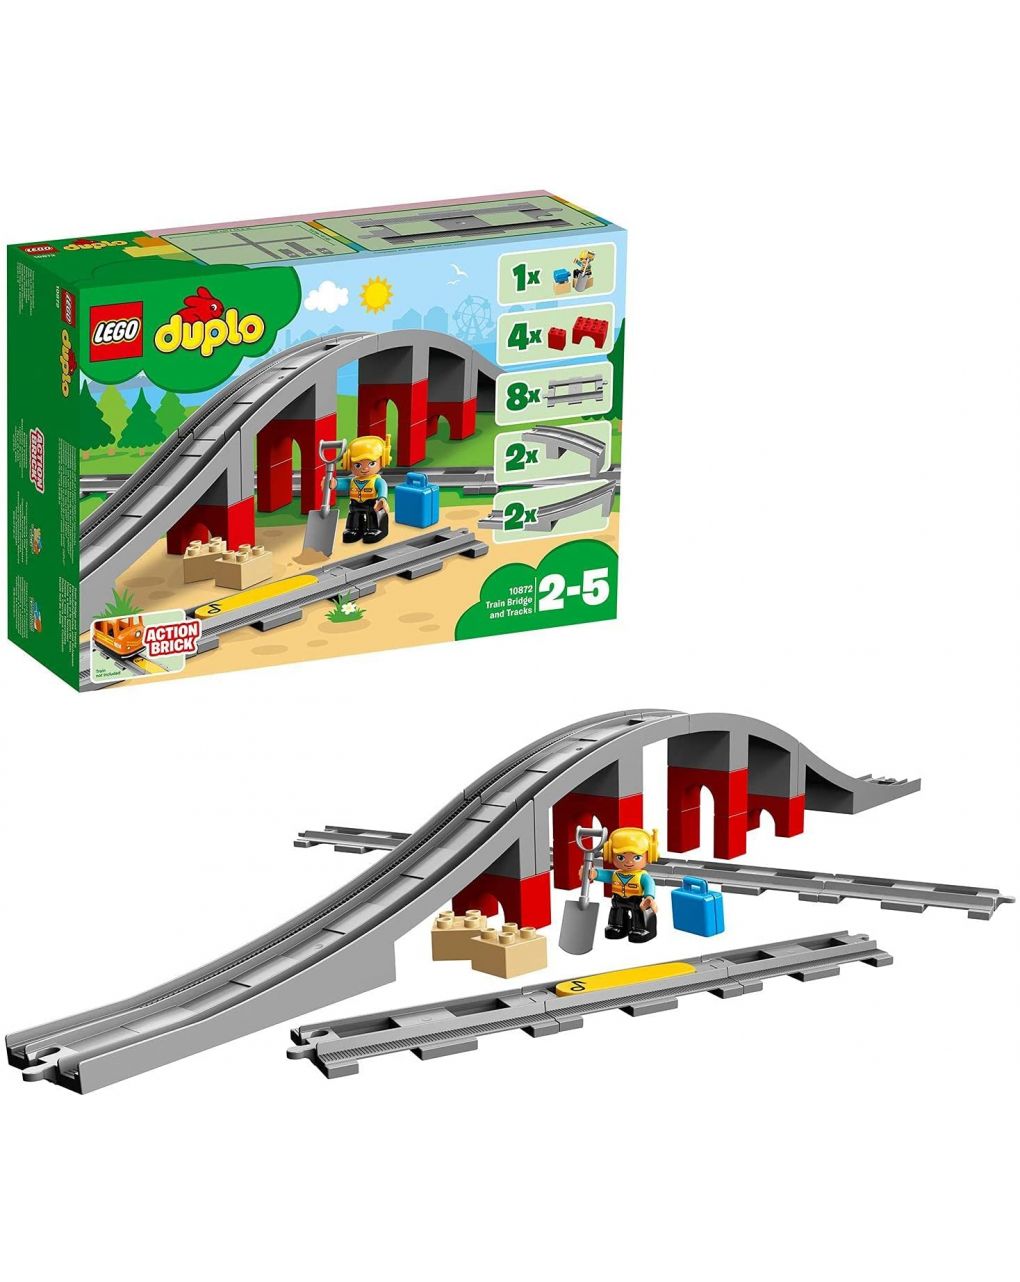 Lego duplo ponte e binari ferrovia - 10872 - LEGO Duplo